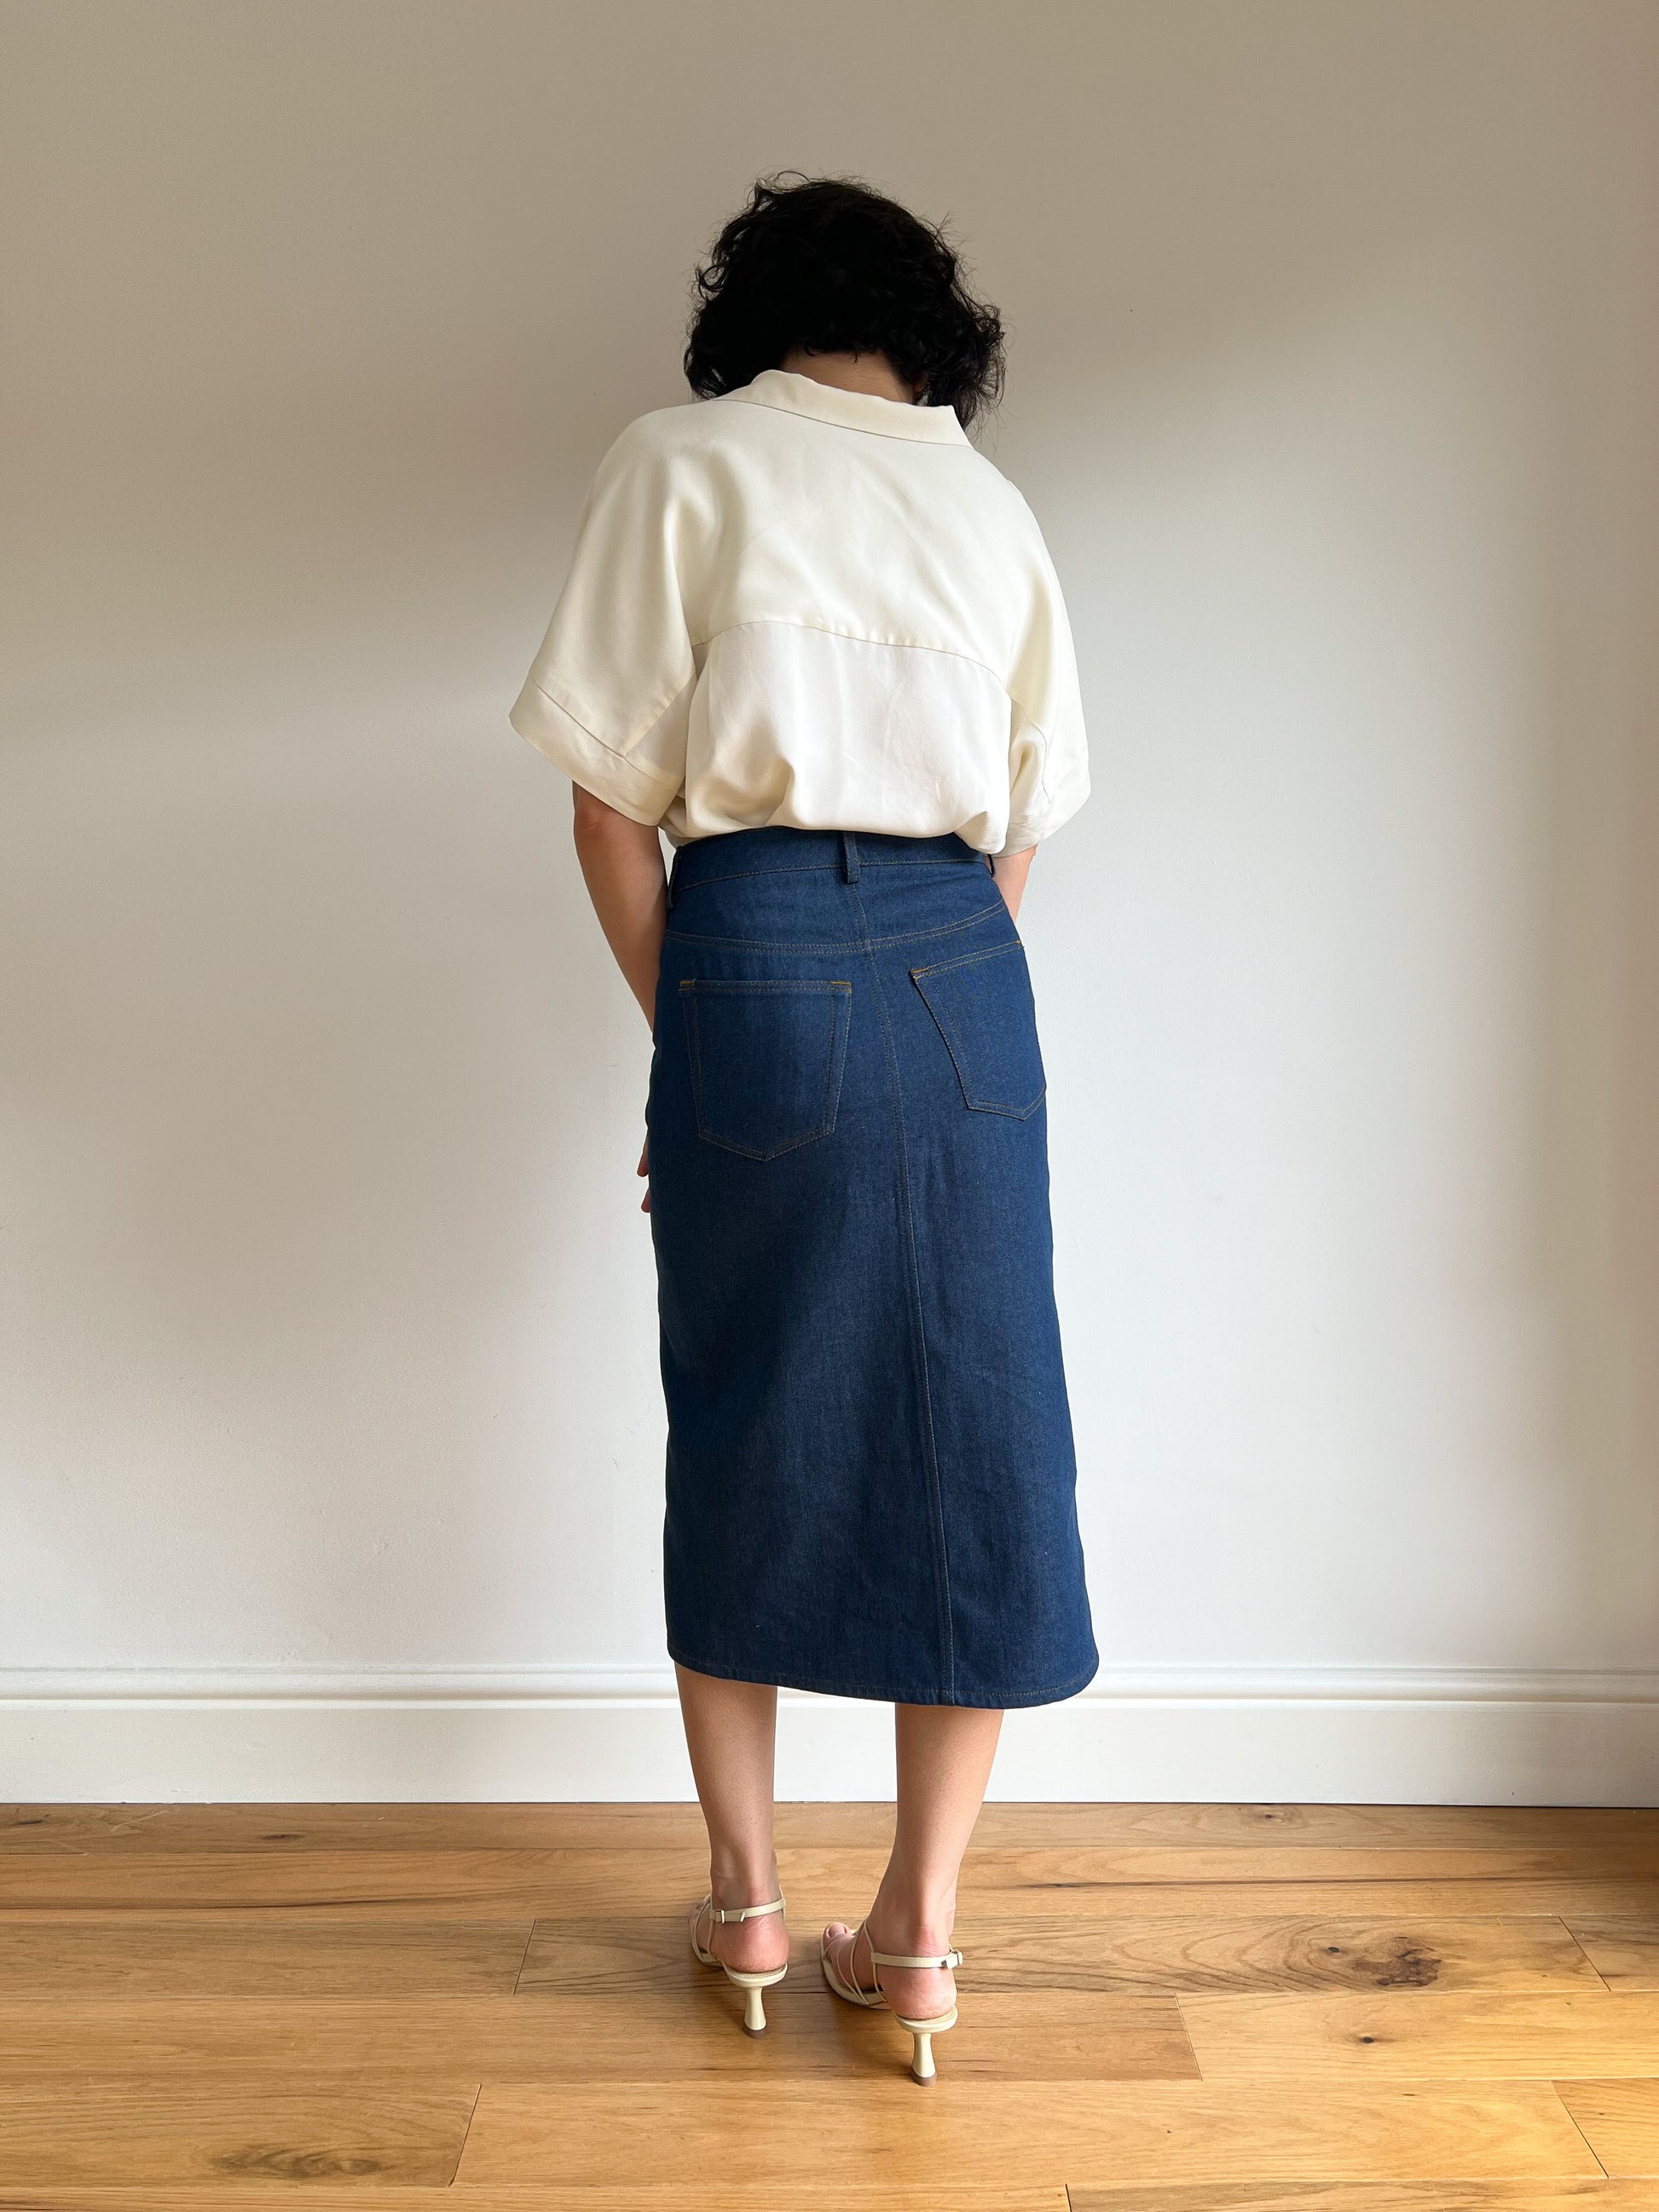 ANNA SKIRT – PDF SEWING PATTERN - Bella loves patterns